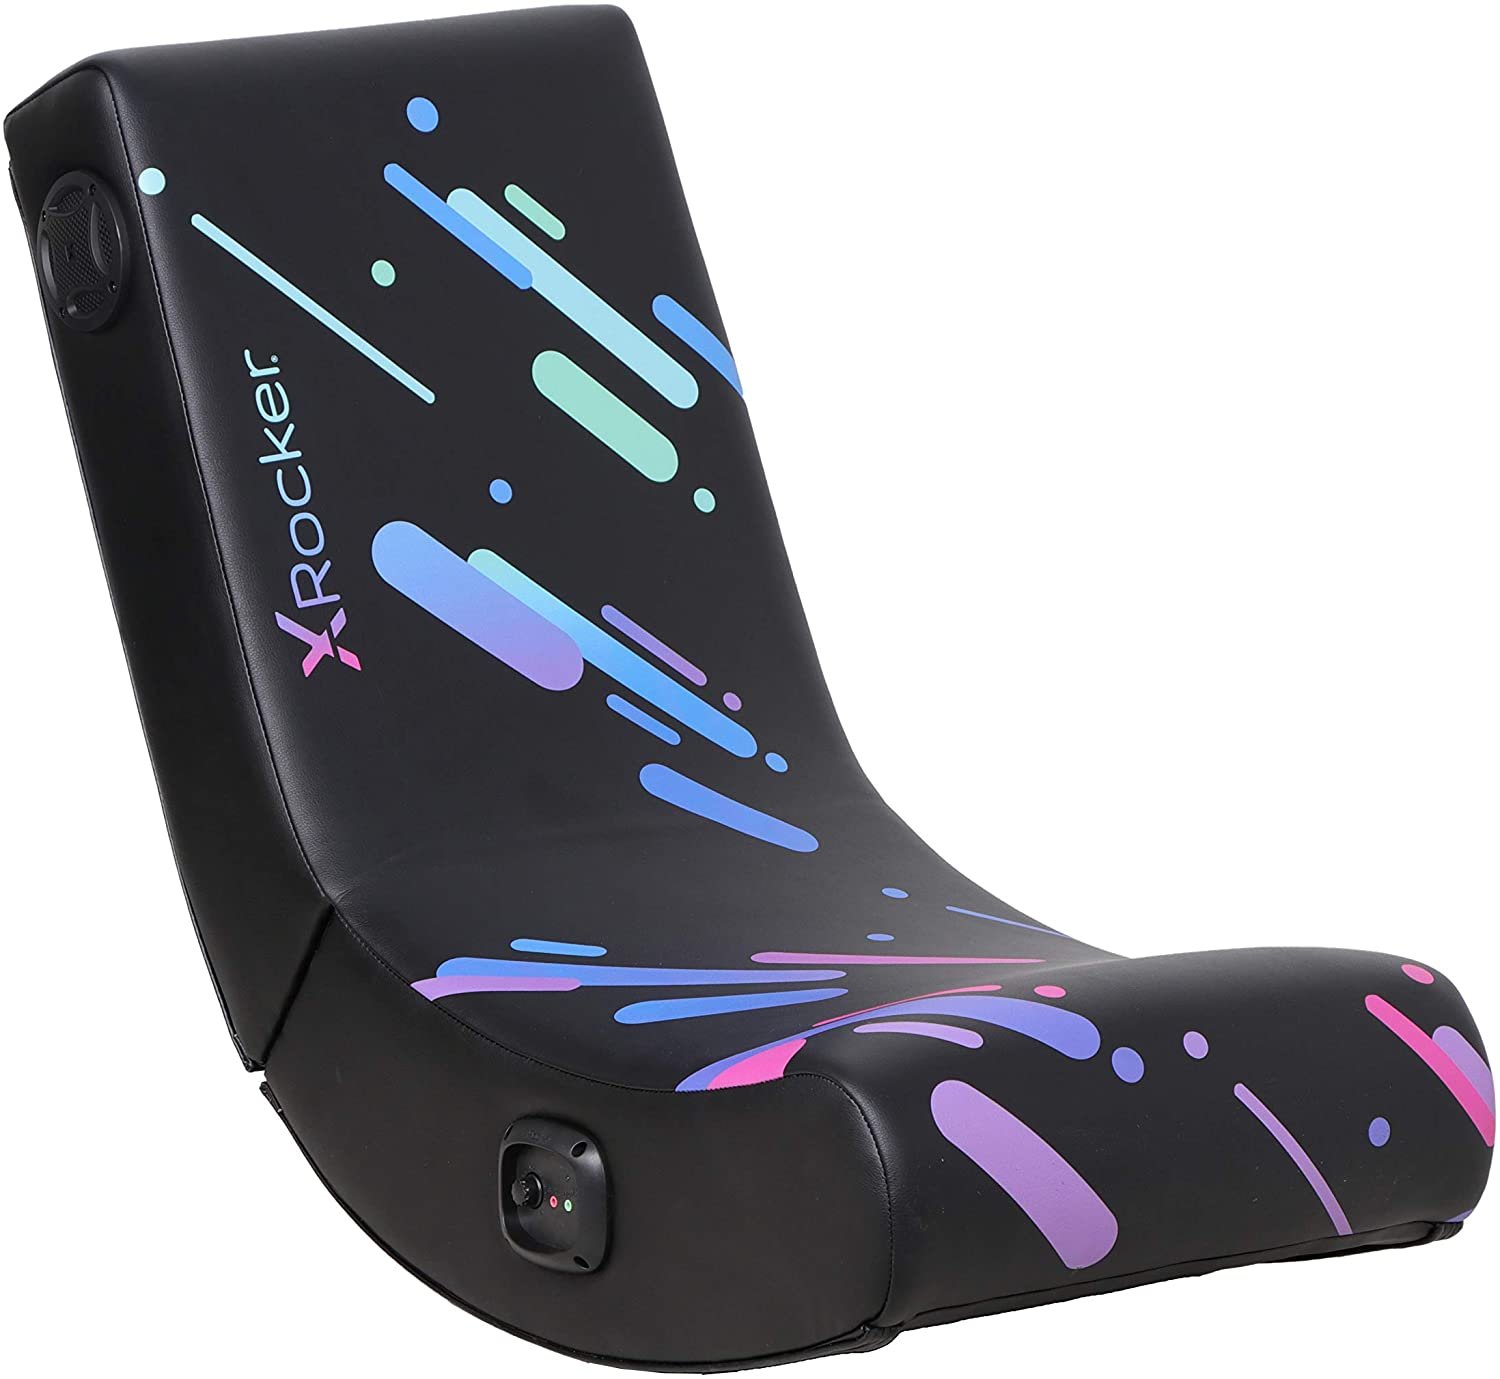  Rocker Galaxy 2.0 BT Printed Floor Rocker Gaming Chair